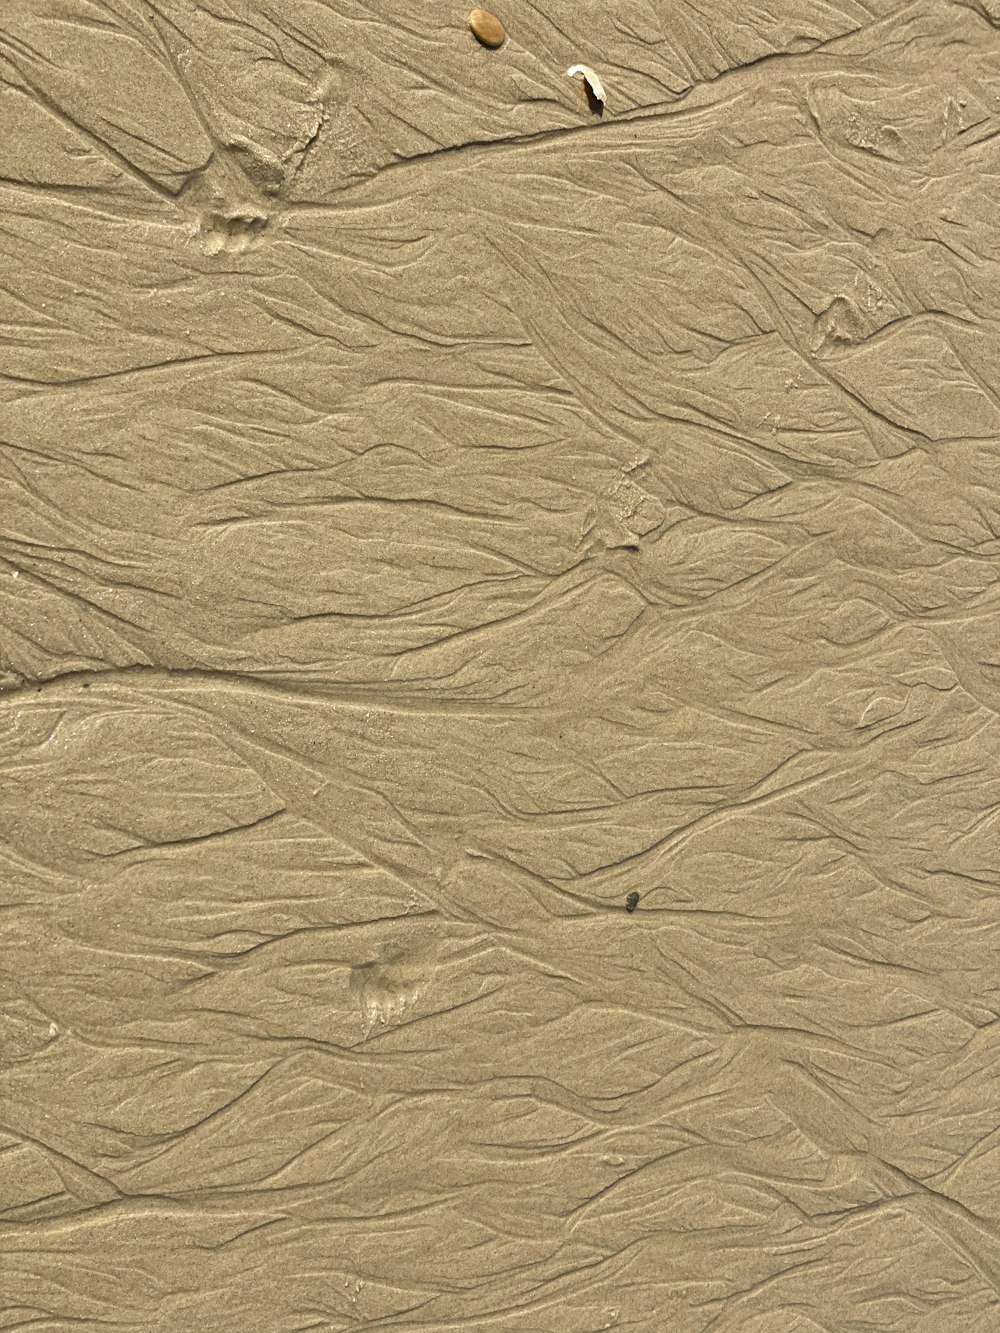 sabbia marrone con sabbia bianca